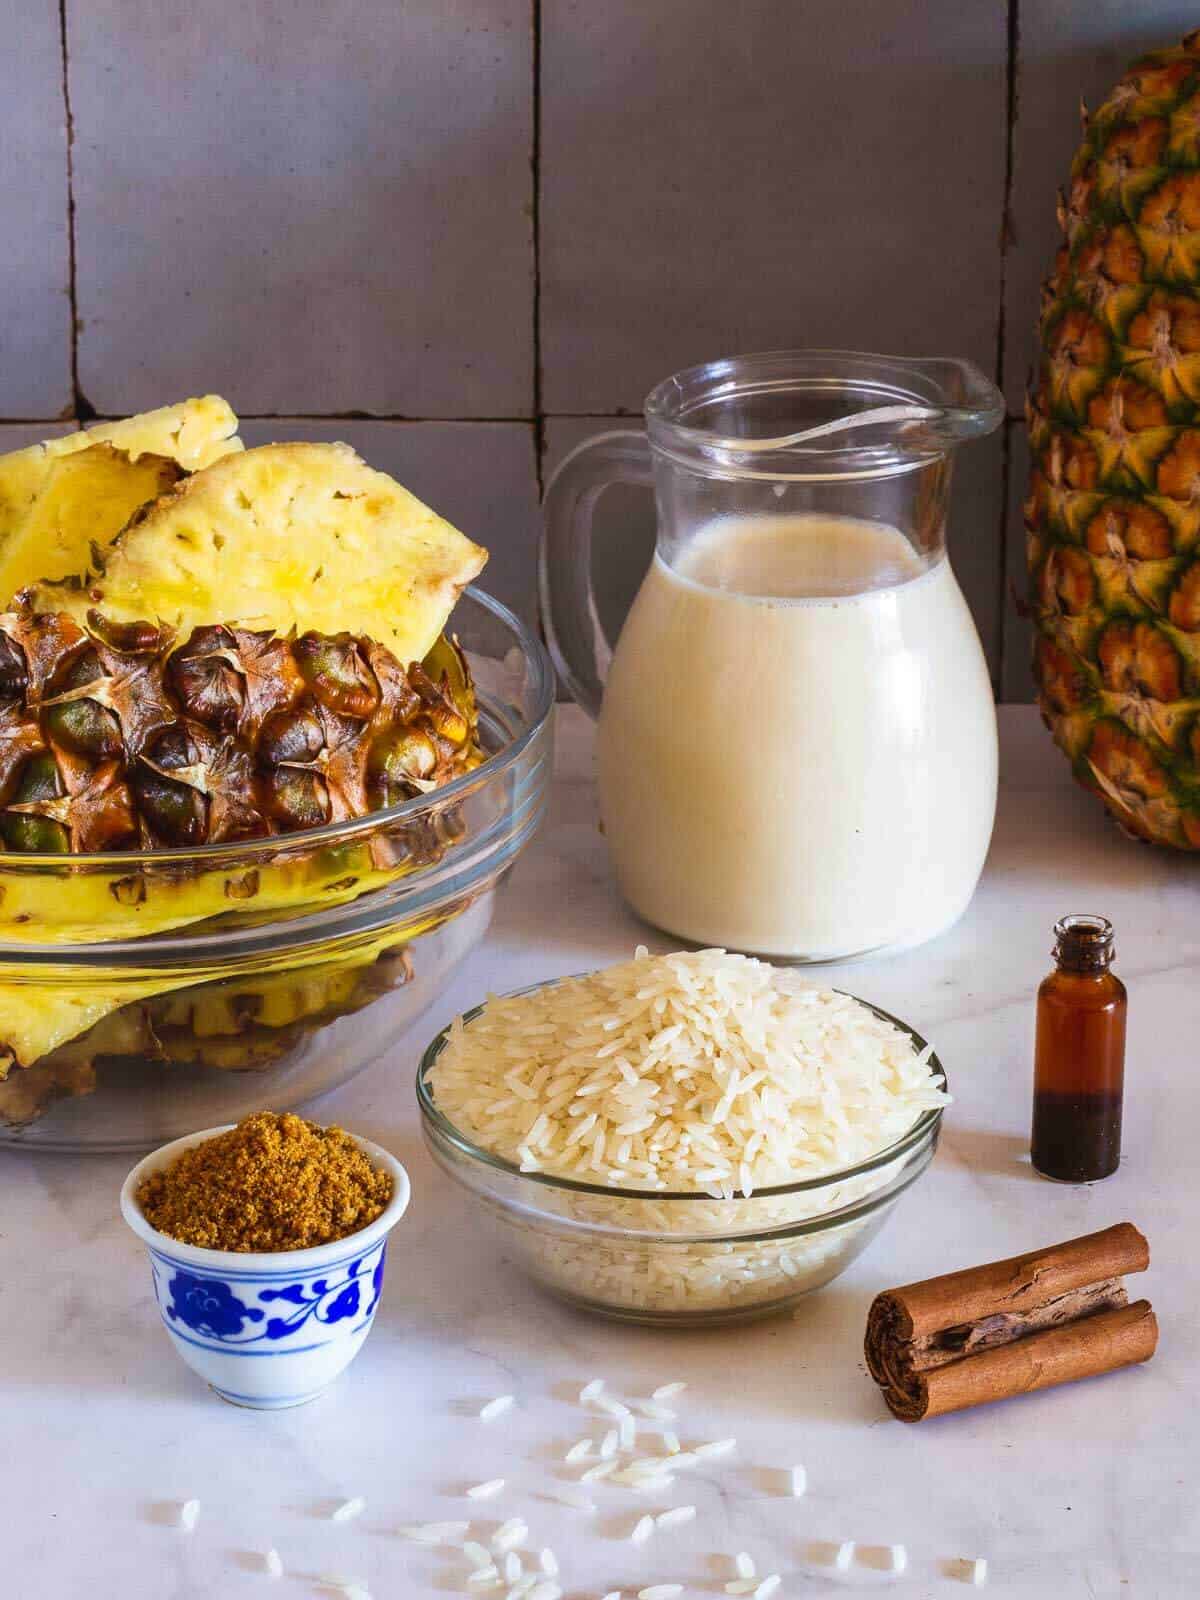 ingredientes para preparar horchata de arroz con piña.